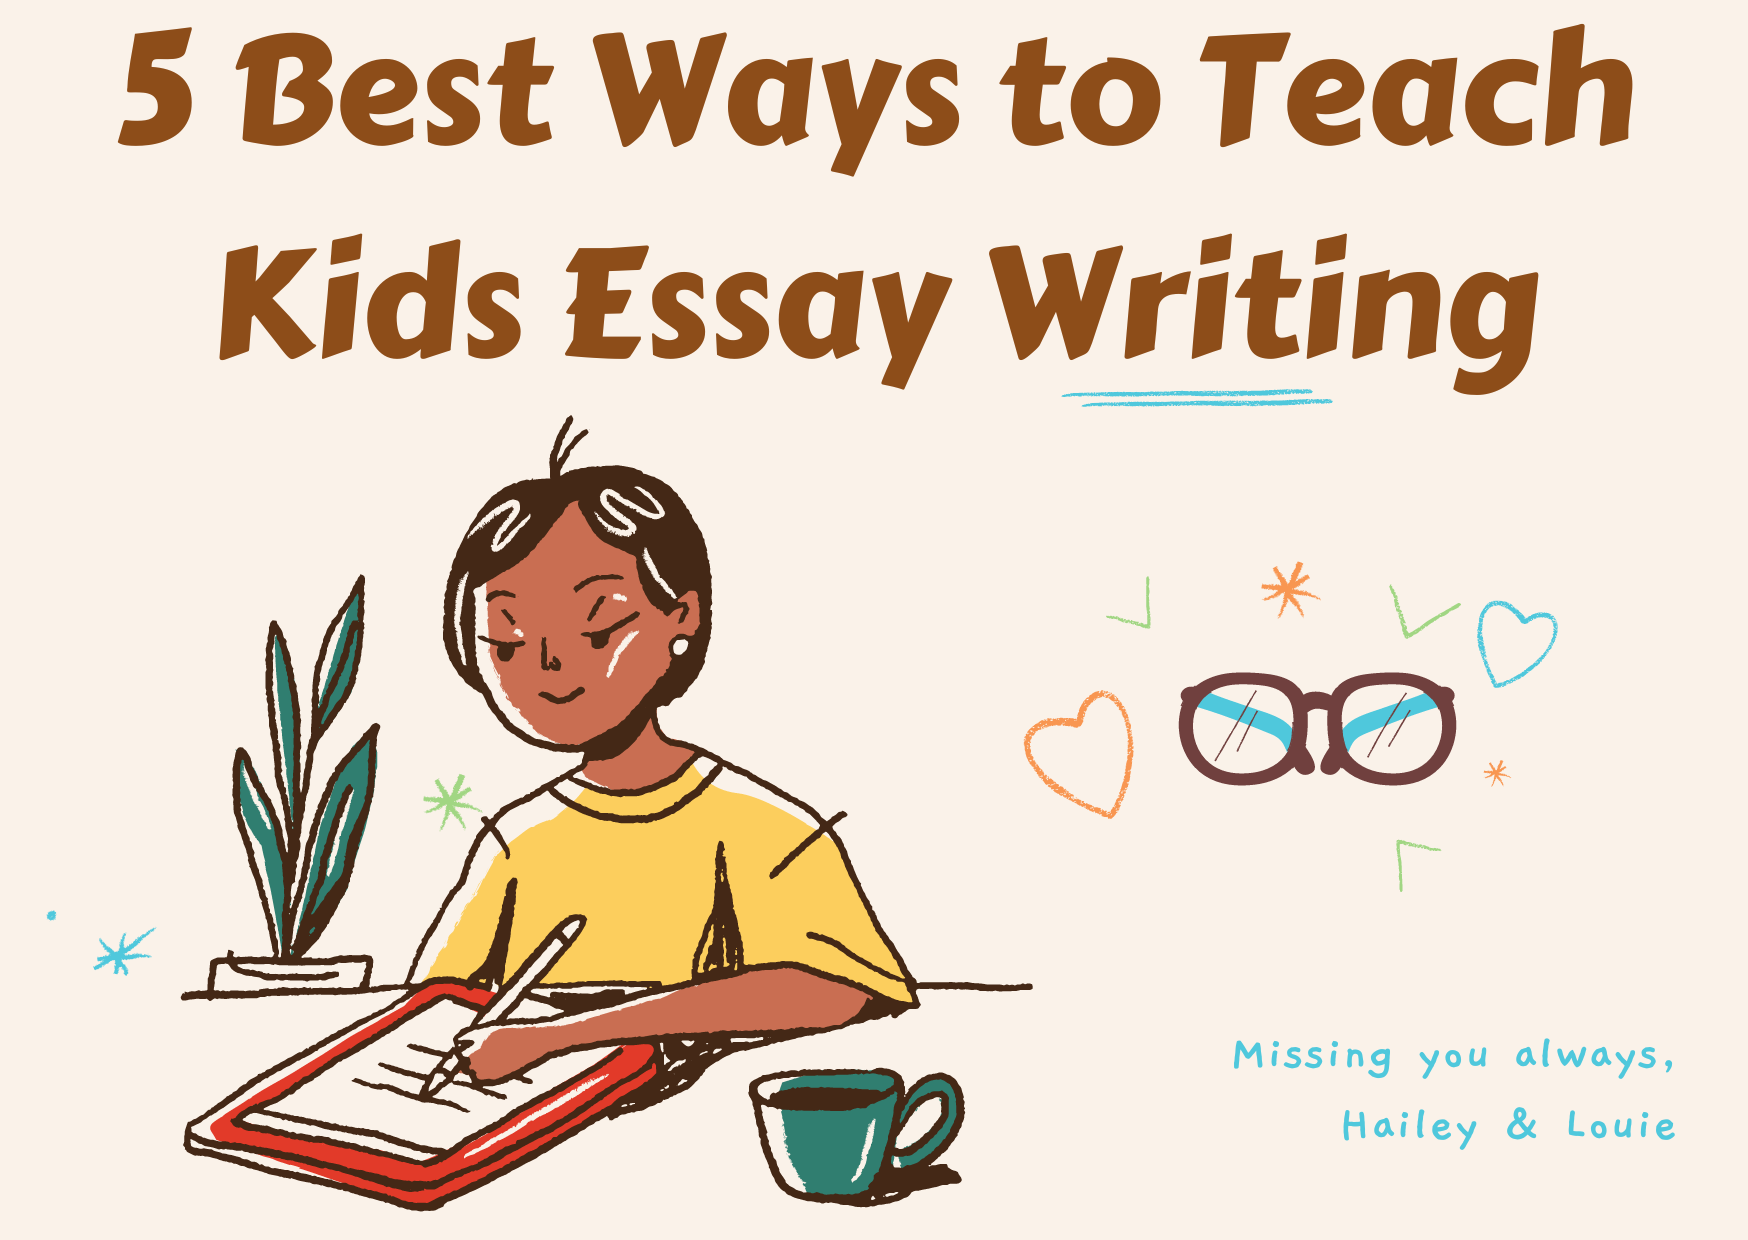 5 Best Ways to Teach Kids Essay Writing